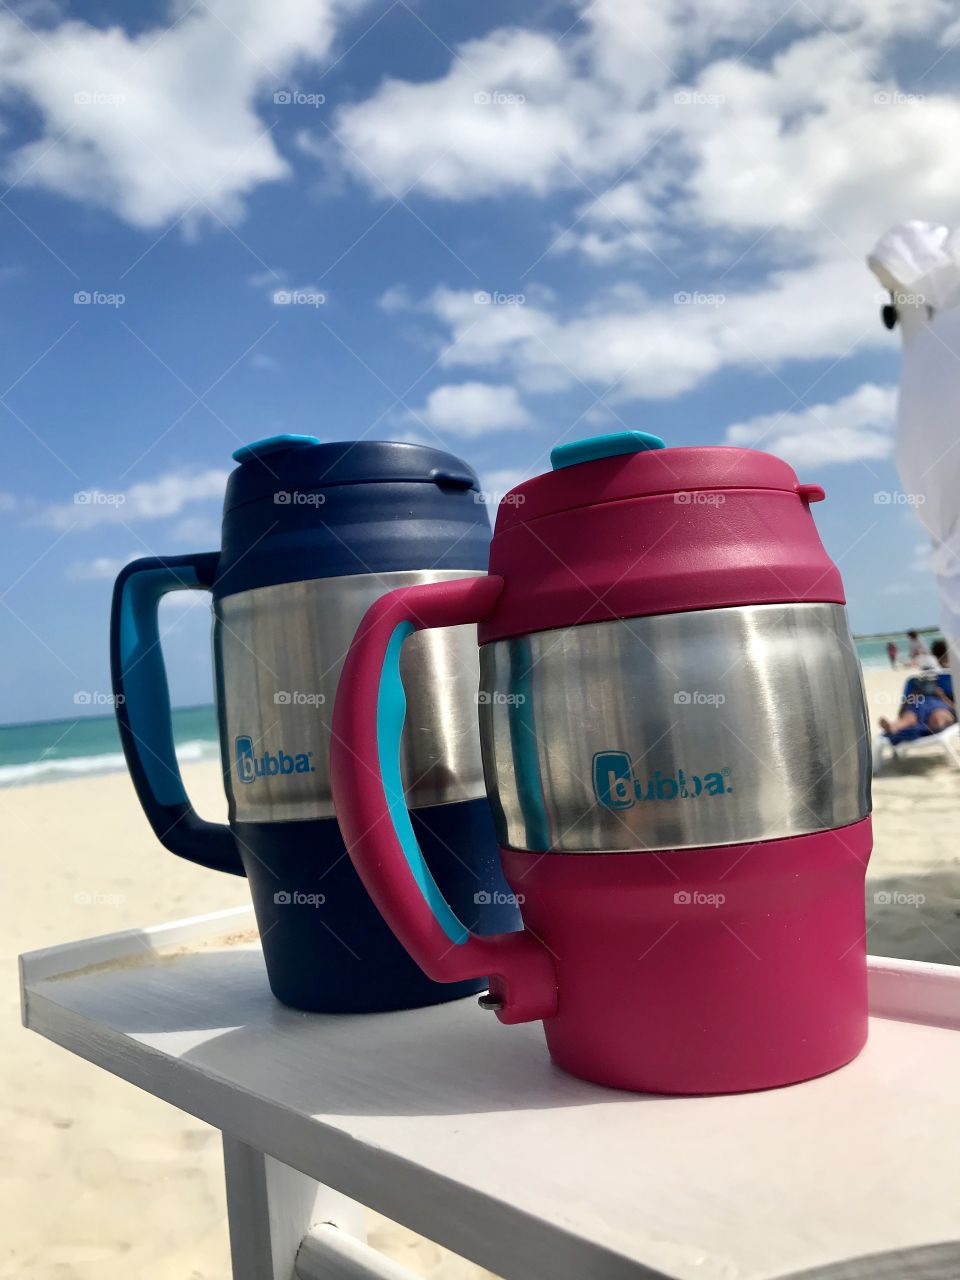 2 Bubba mugs on a beach in Cuba